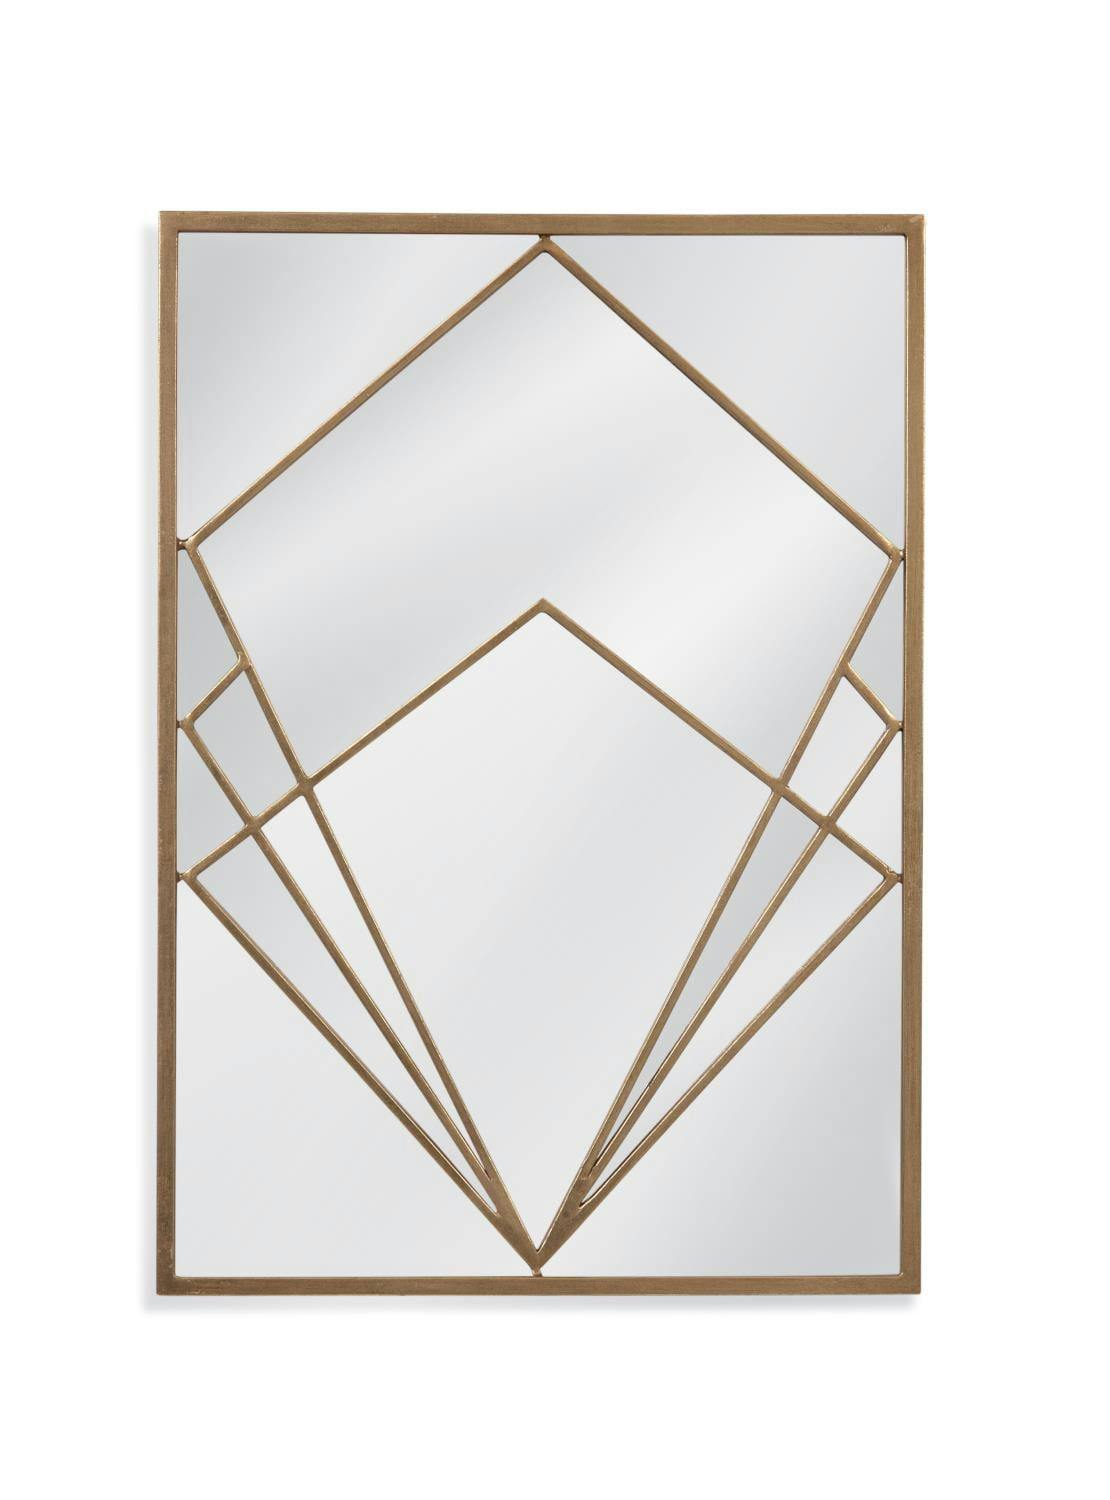 Jase Transitional Gold Metal Rectangular Wall Mirror, 20x28 inch